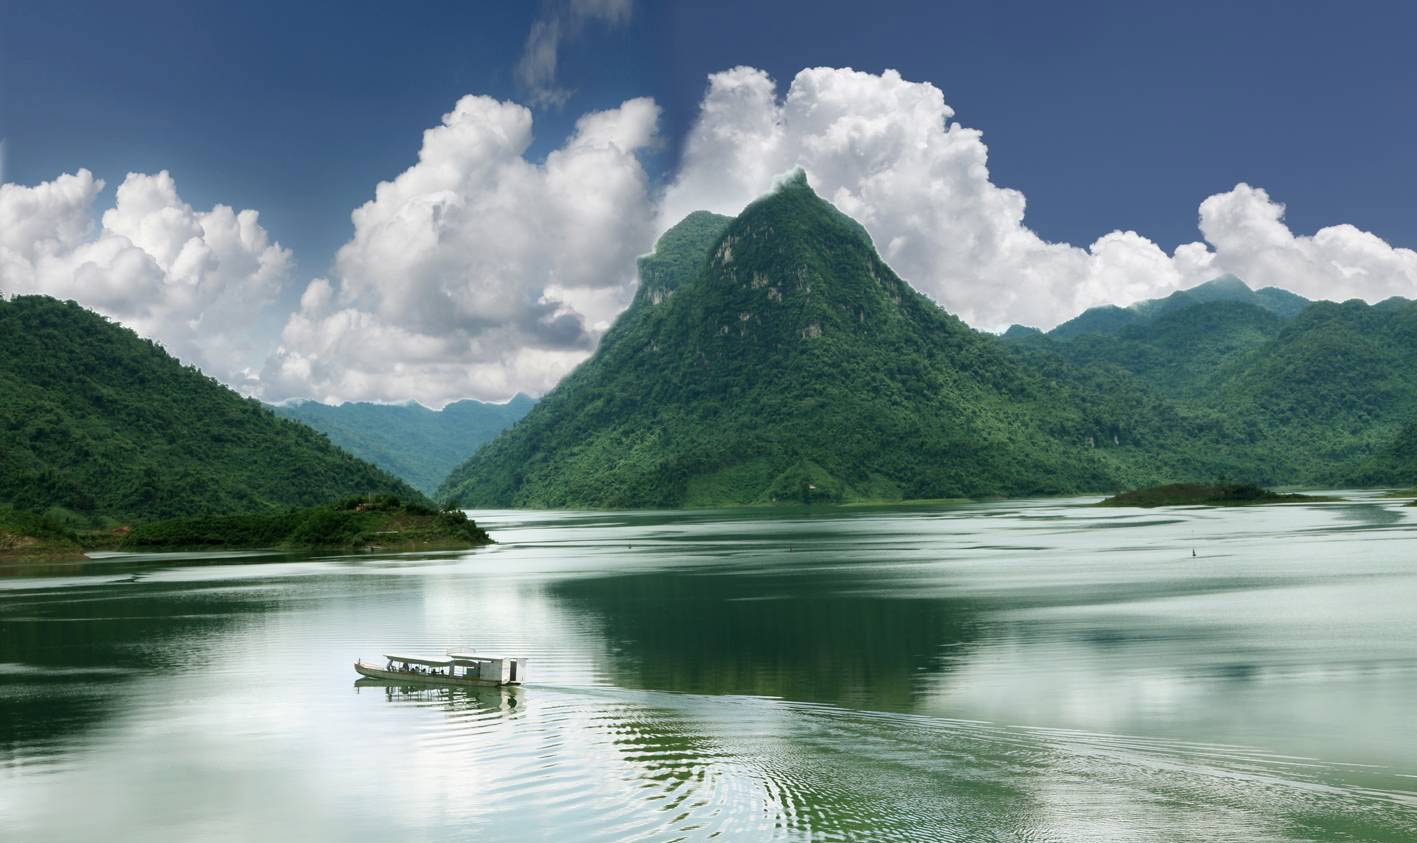 Pa Khoang Lake is referred to as a miniature Ha Long Bay